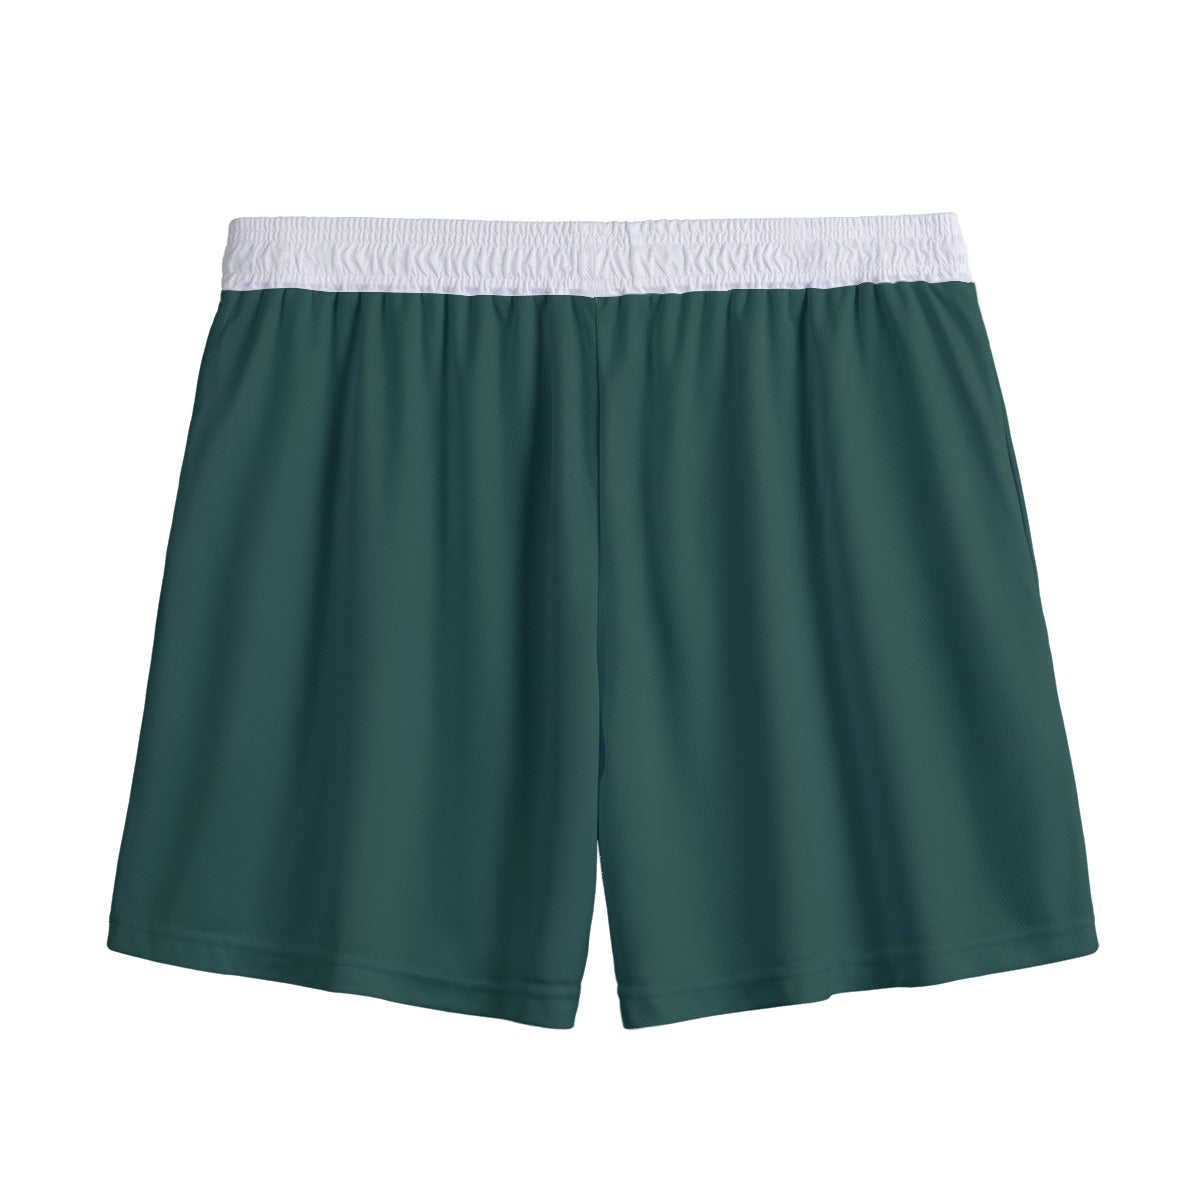 Michigan State Mesh Shorts